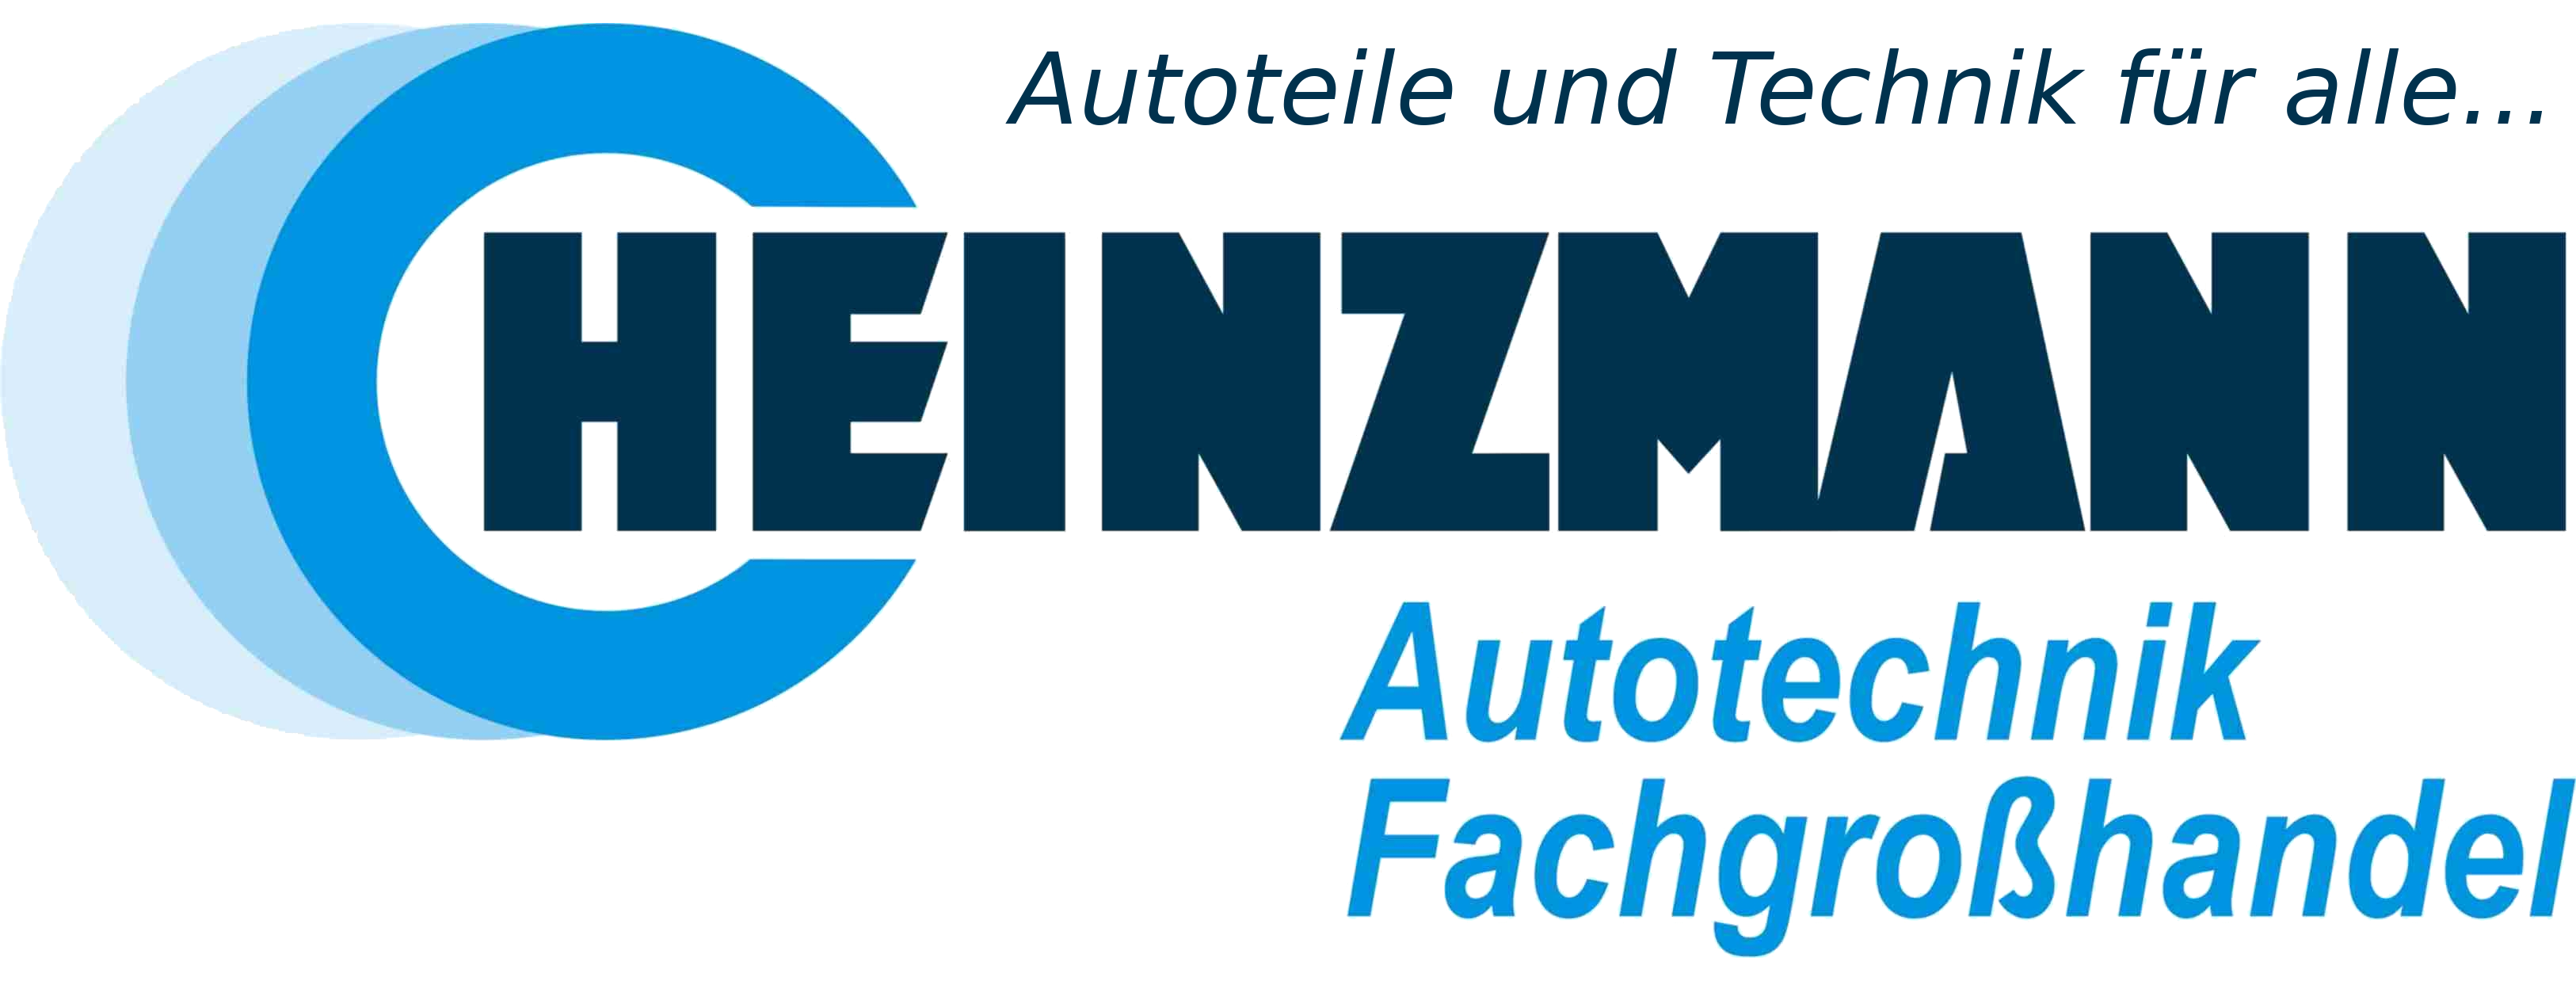 Heinzmann - Autotechnik Fachgoßhandel - Logo 3252x1243